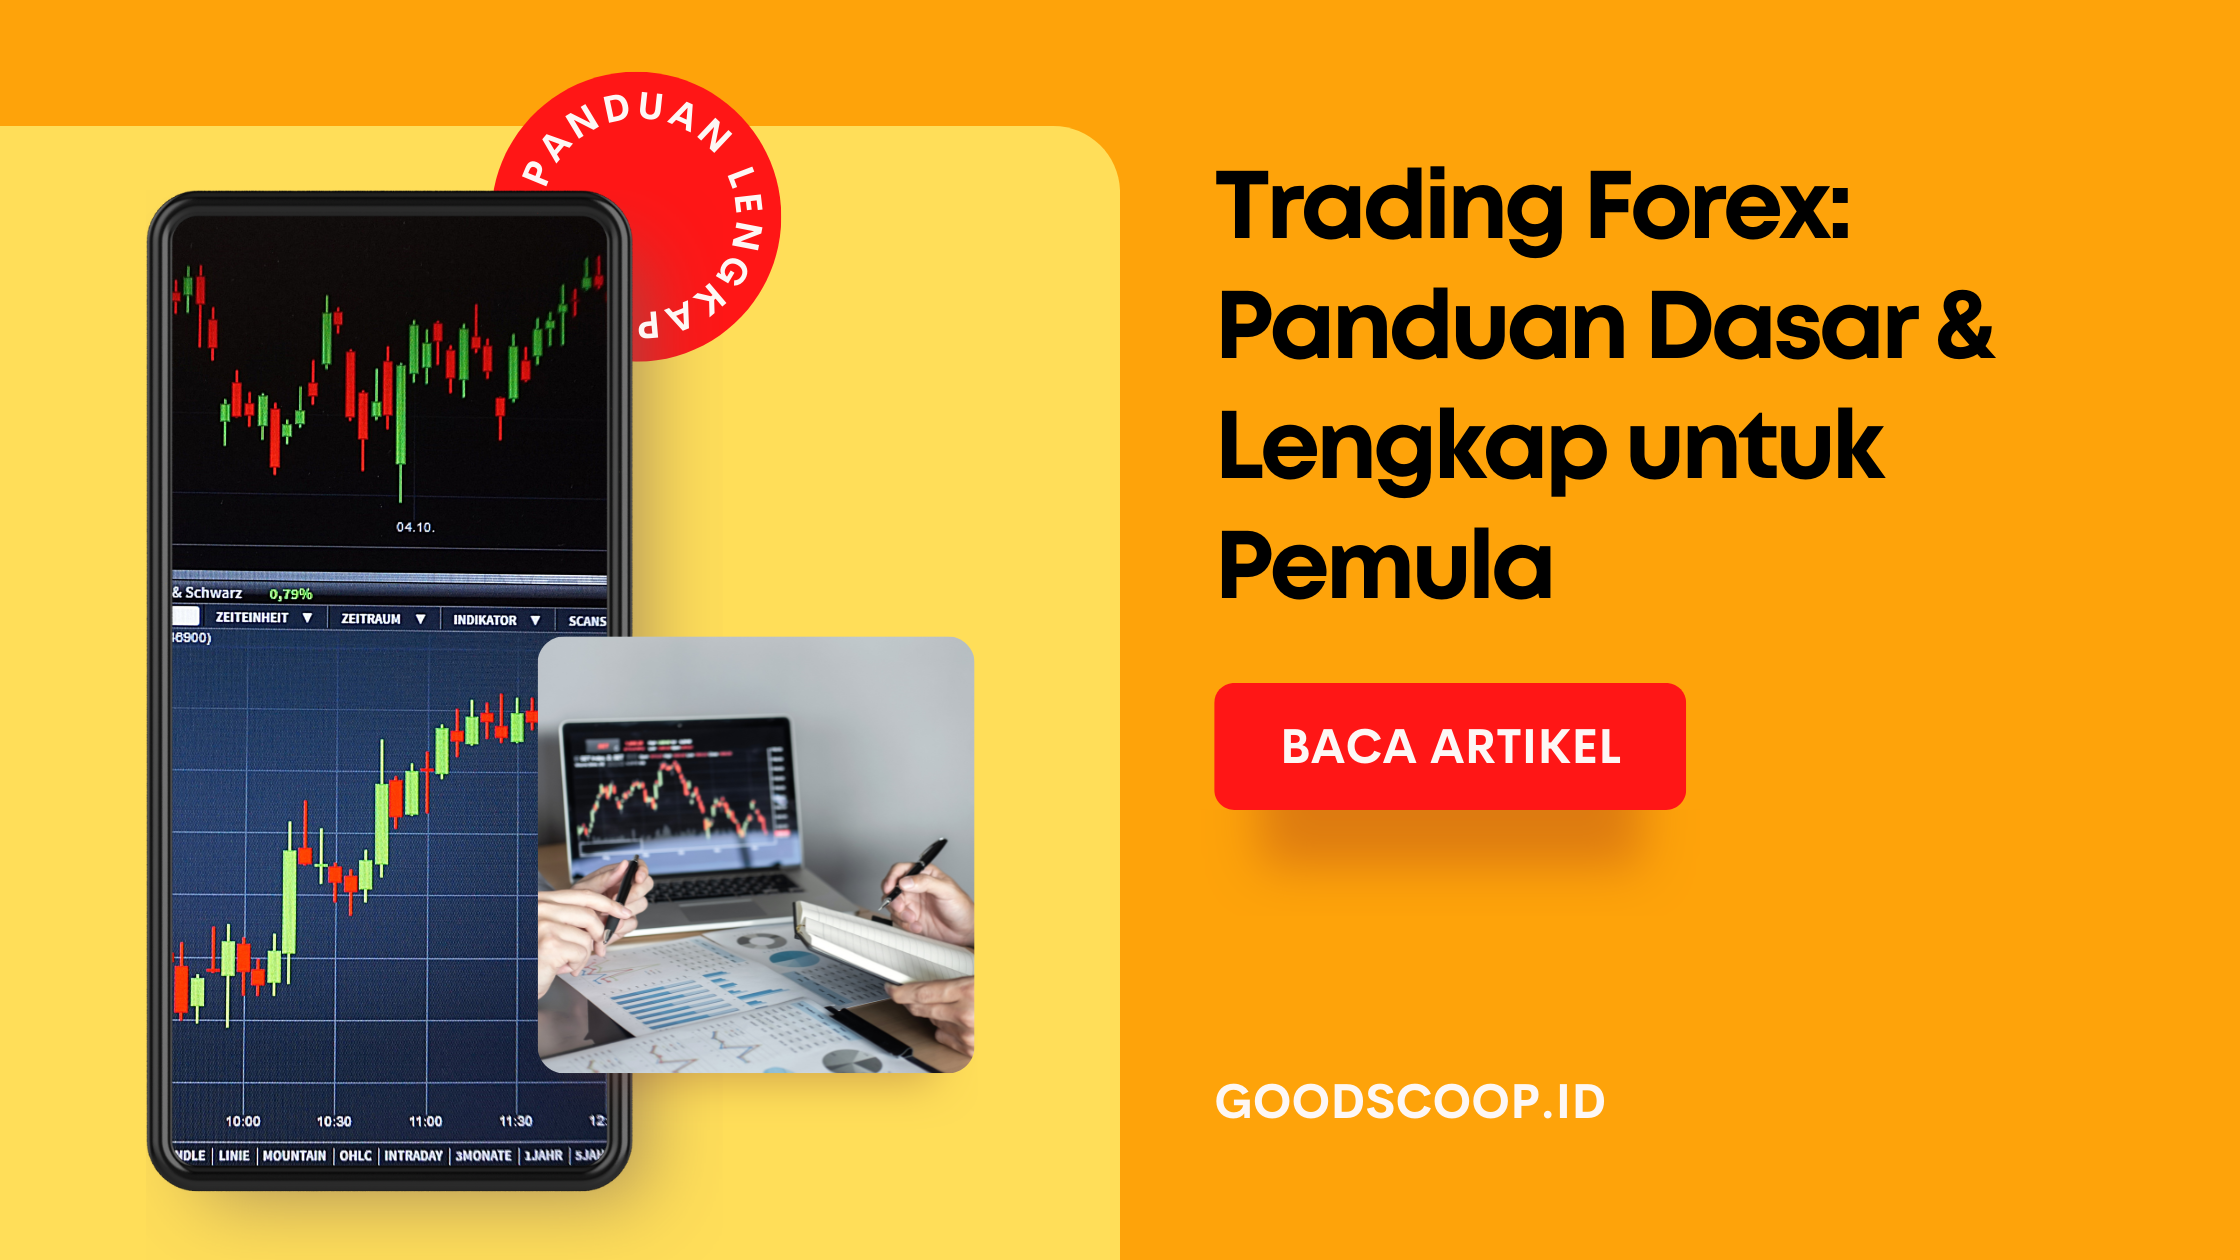 Trading Forex: Panduan Dasar & Lengkap untuk Pemula